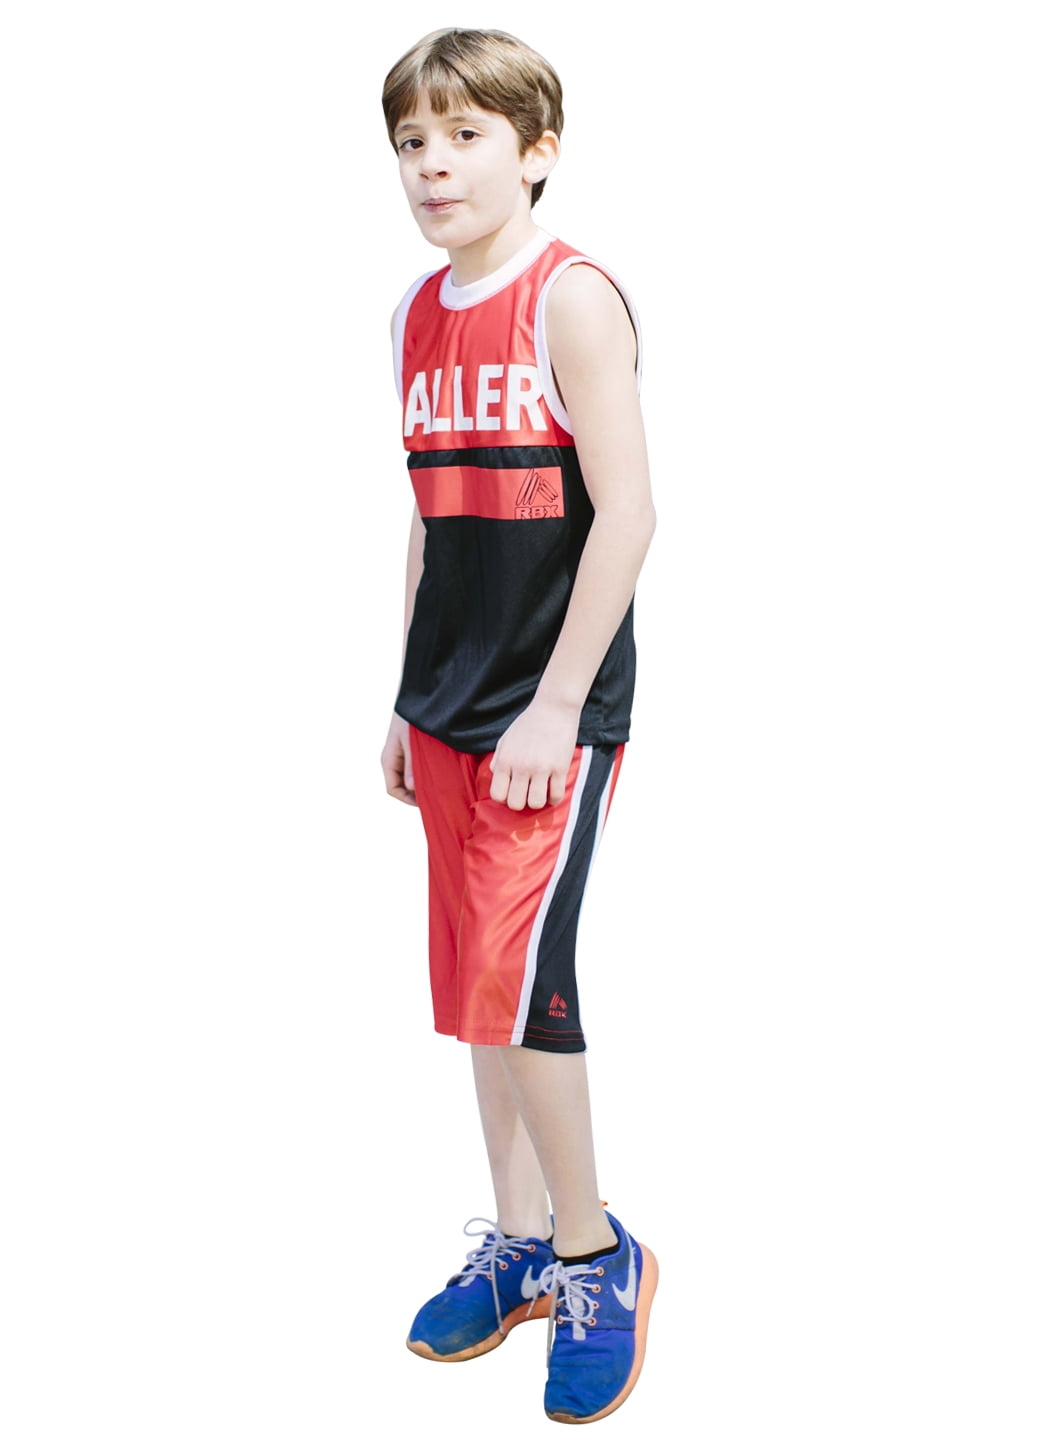 FEESHOW Kids Boys 2 Piece Basketball Jersey Vest Top with Shorts Set Sports Basketball Baseball Team Uniform Outfit